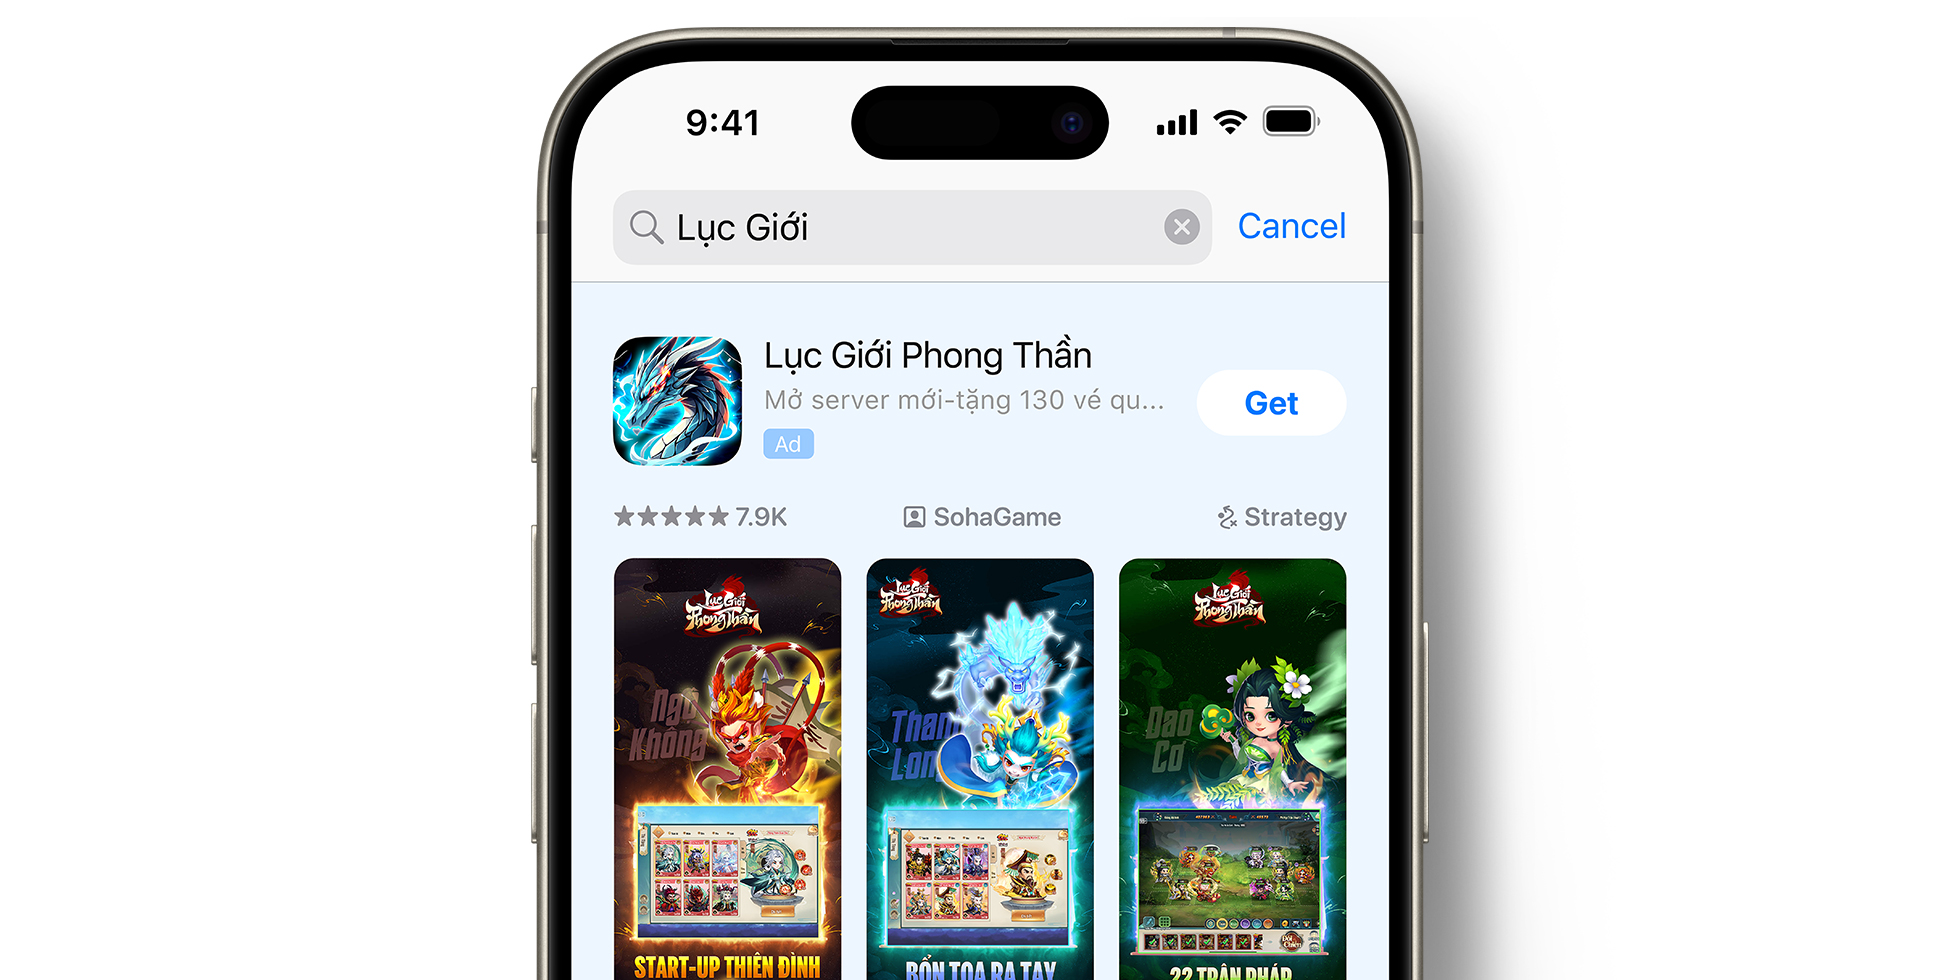 App Store 上的 Long Thần Lục Giới 广告